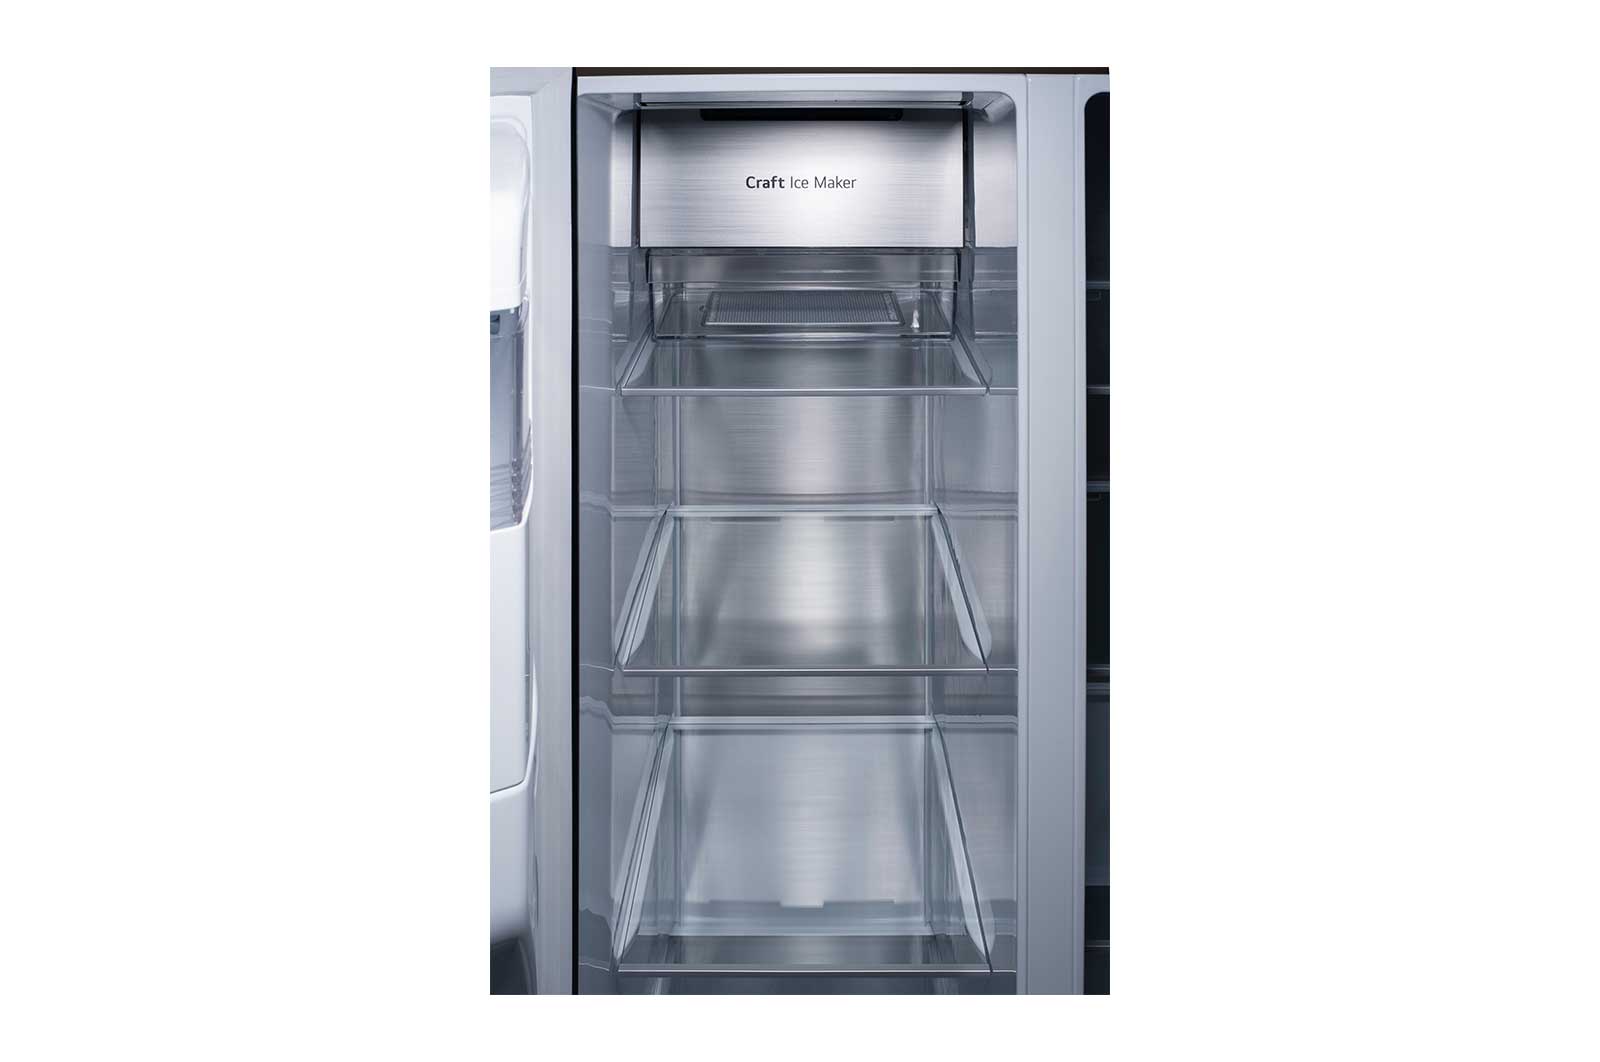 Lg LRSOS2706D 27 Cu. Ft. Side-By-Side Instaview™ Refrigerator